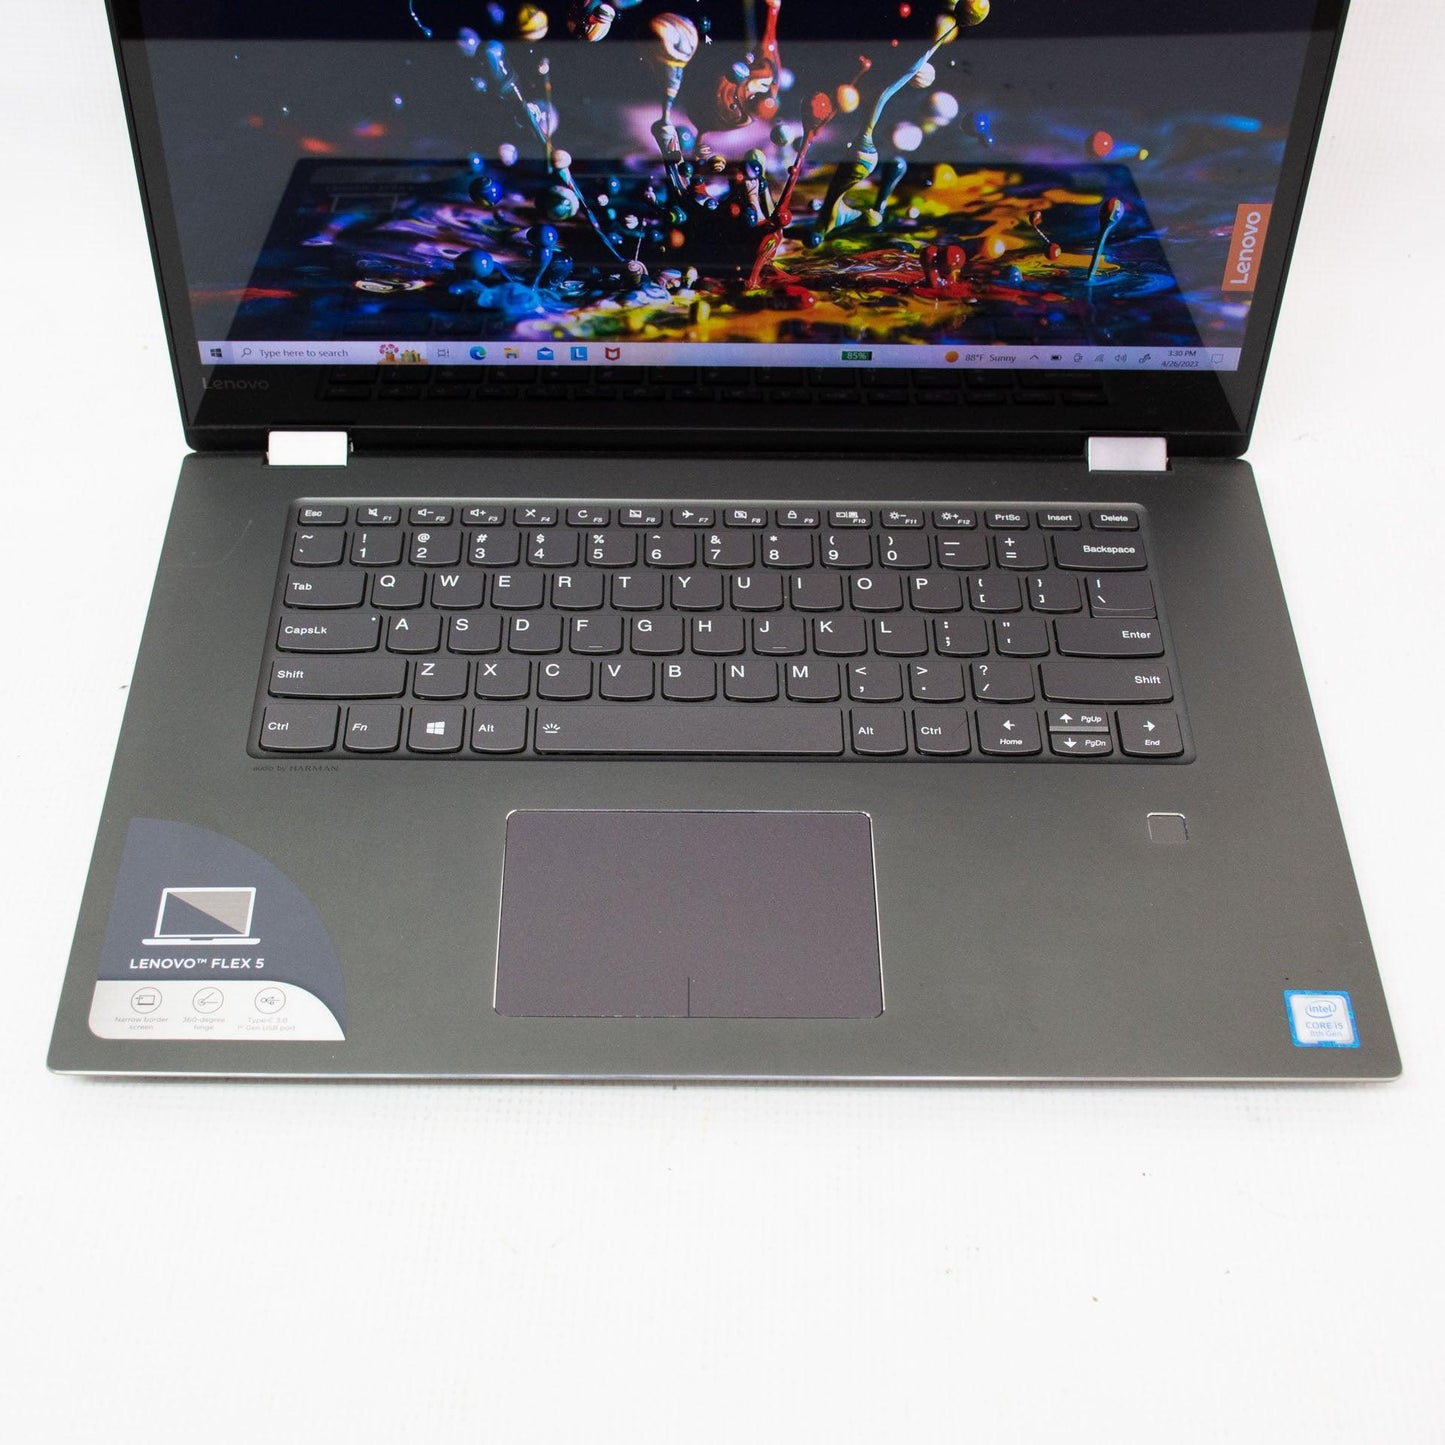 Lenovo Flex 5-1570 15.6" Laptop, Intel i5-8250U @ 1.8 Ghz, 8 GB Ram, 256 GB SSD, Win 10 - ipawnishop.com